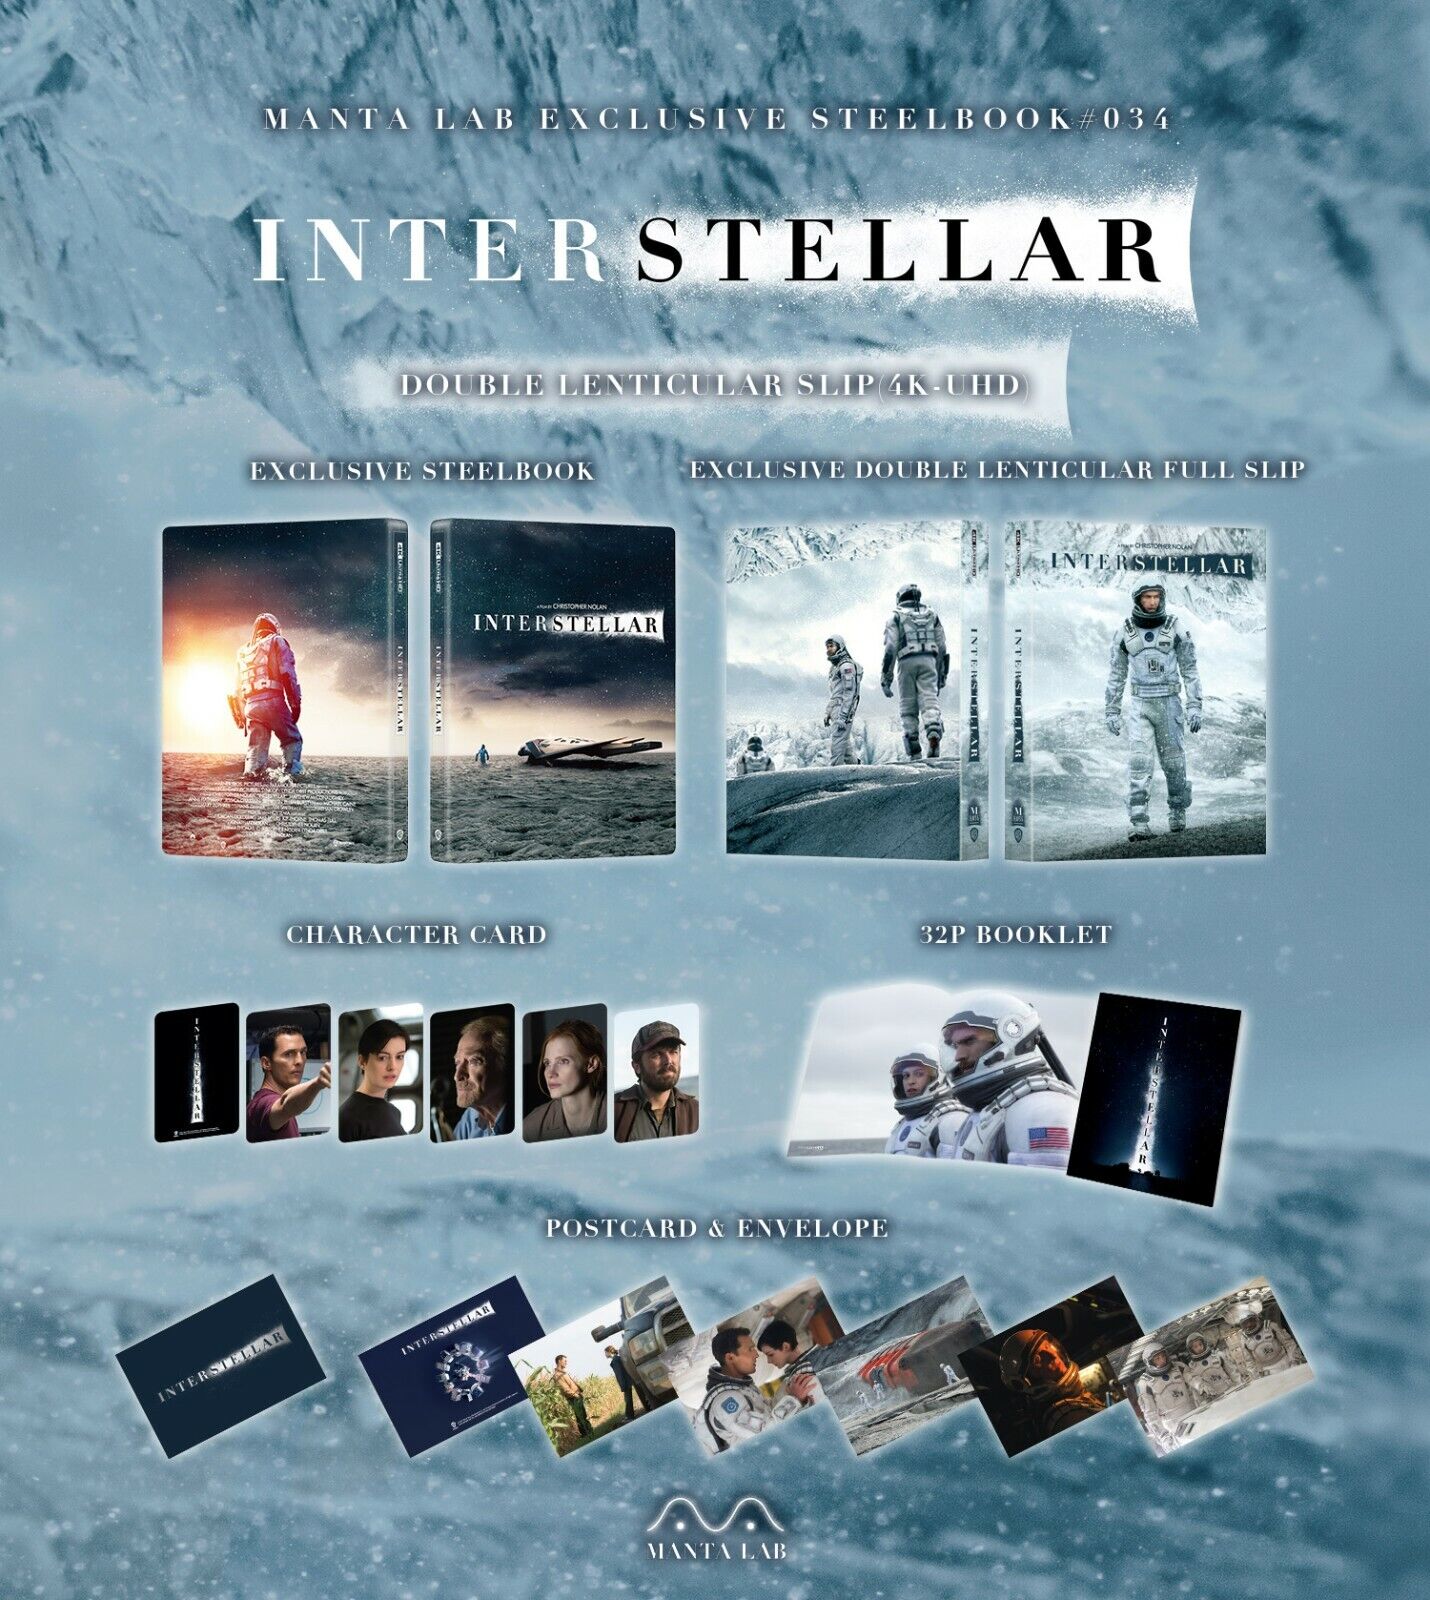 Interstellar 4K Blu-ray Steelbook Manta Lab Exclusive ME#34 One Click Box Set